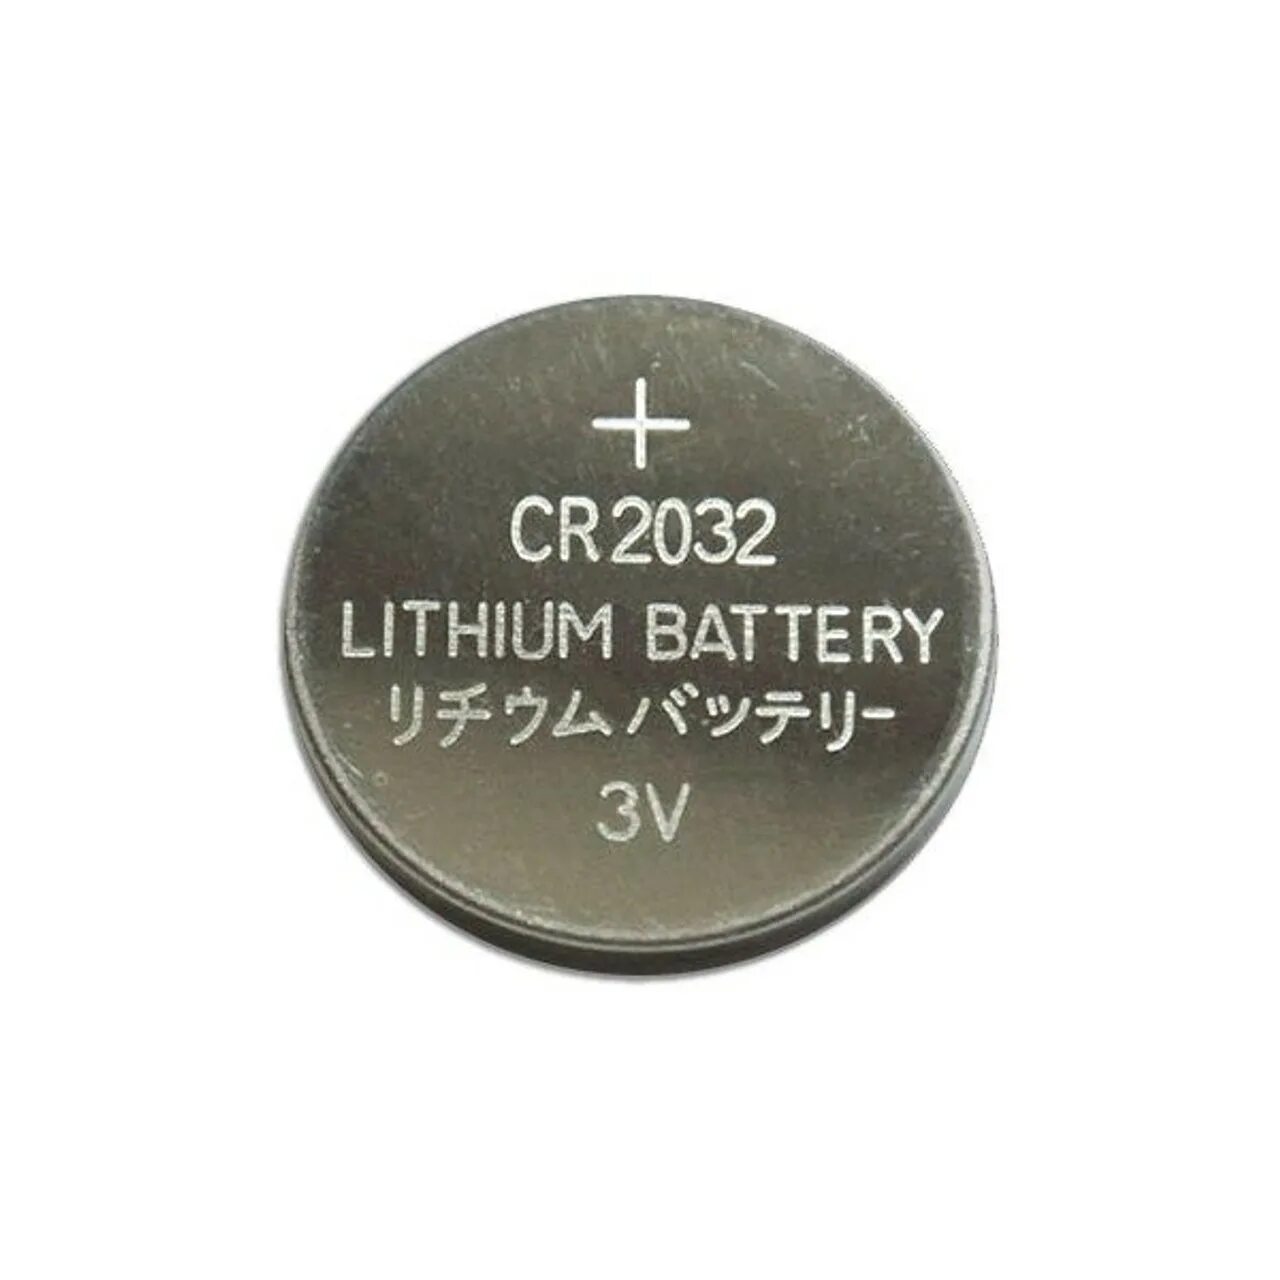 Батарейка cr2032 3v купить. Батарейка cr2032 3v Lithium. Литиевая батарейка 3v cr2032. Батарея-Lithium-cr2032-3v. Батарейка cr2032 (3v).